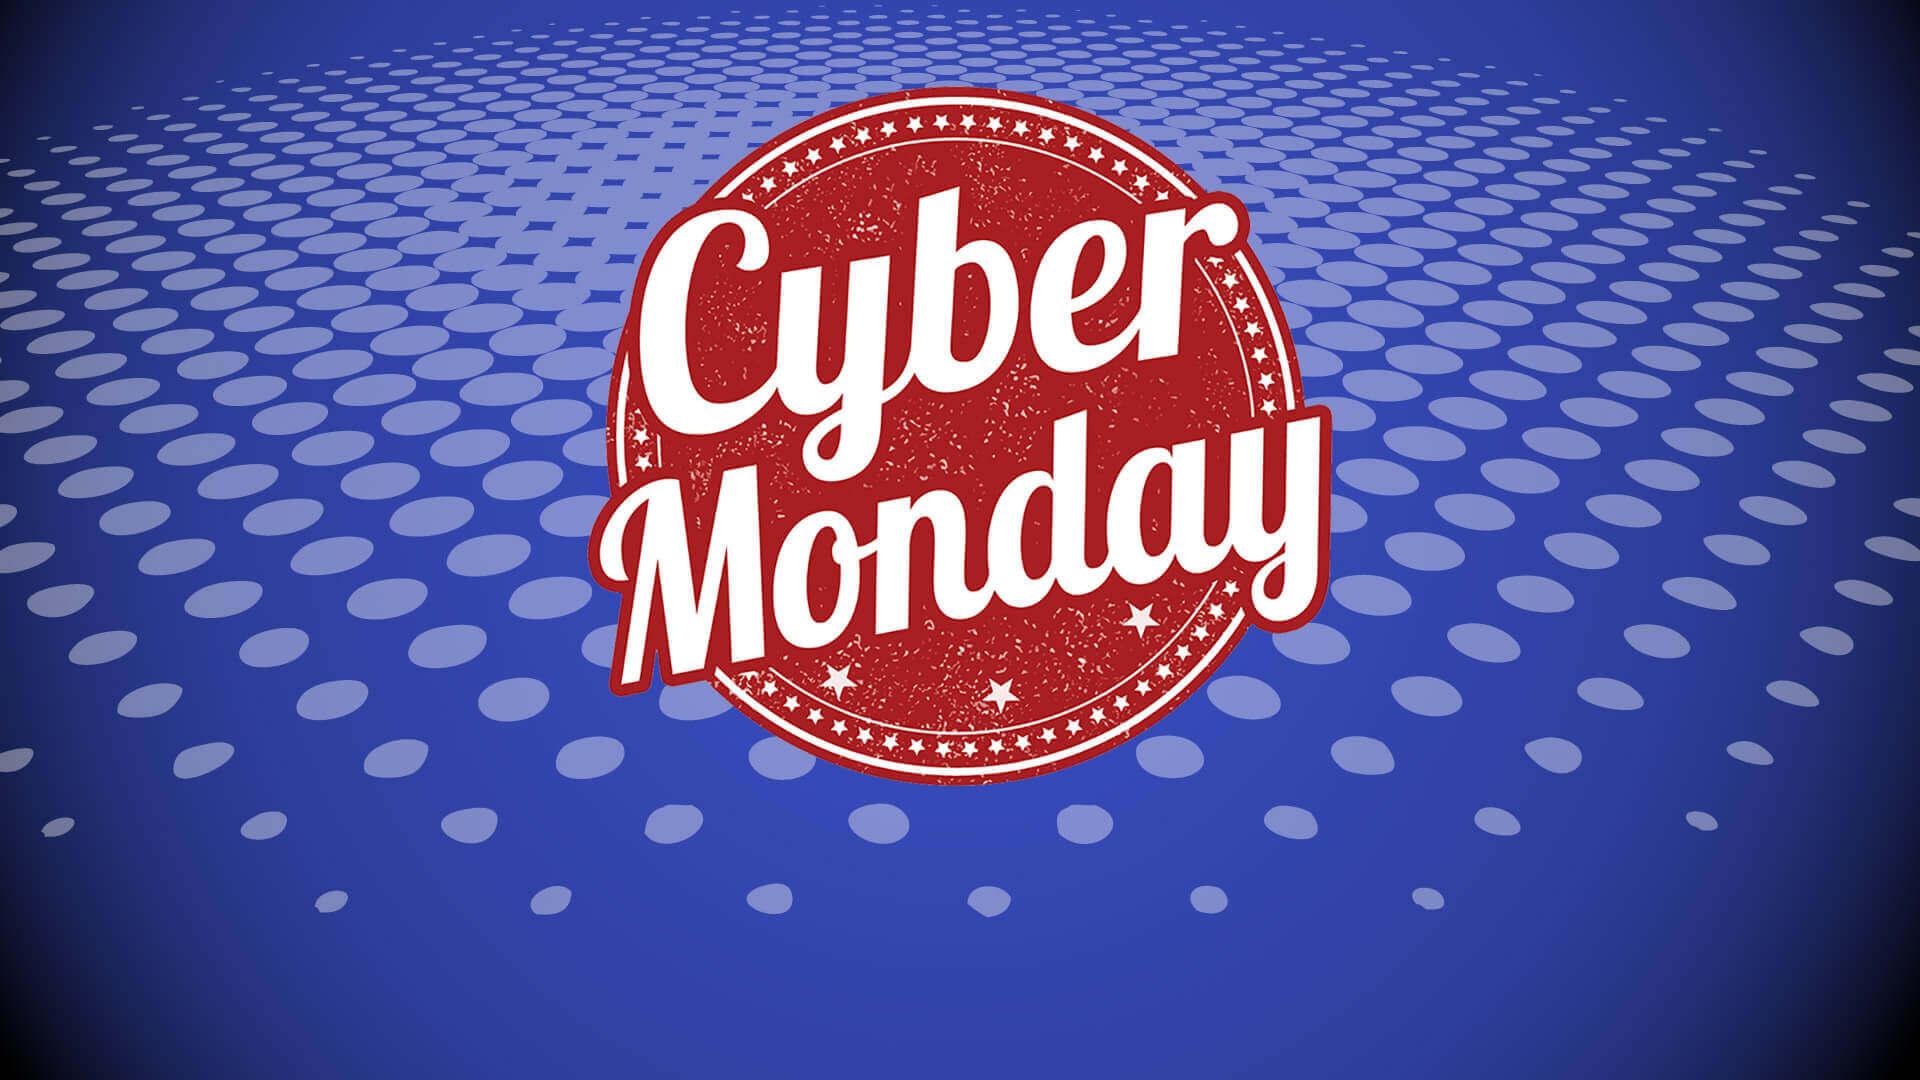 Cyber Monday: 40 best tech deals as selected